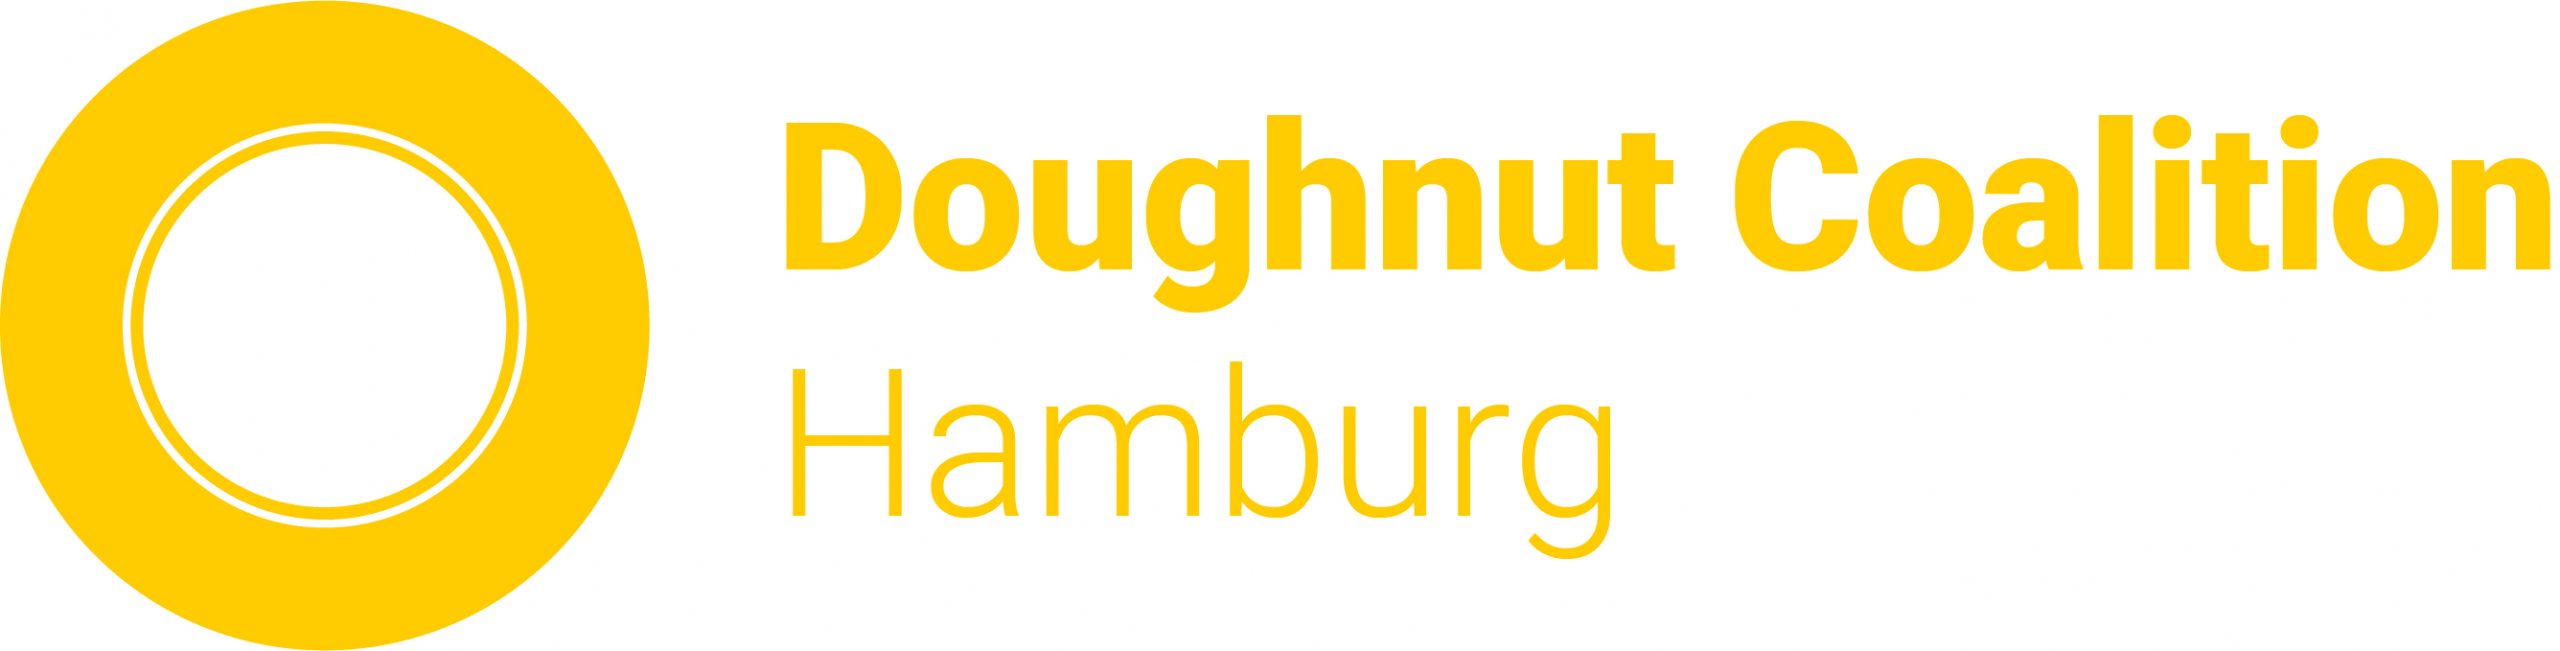 Doughnut Coalition Hamburg